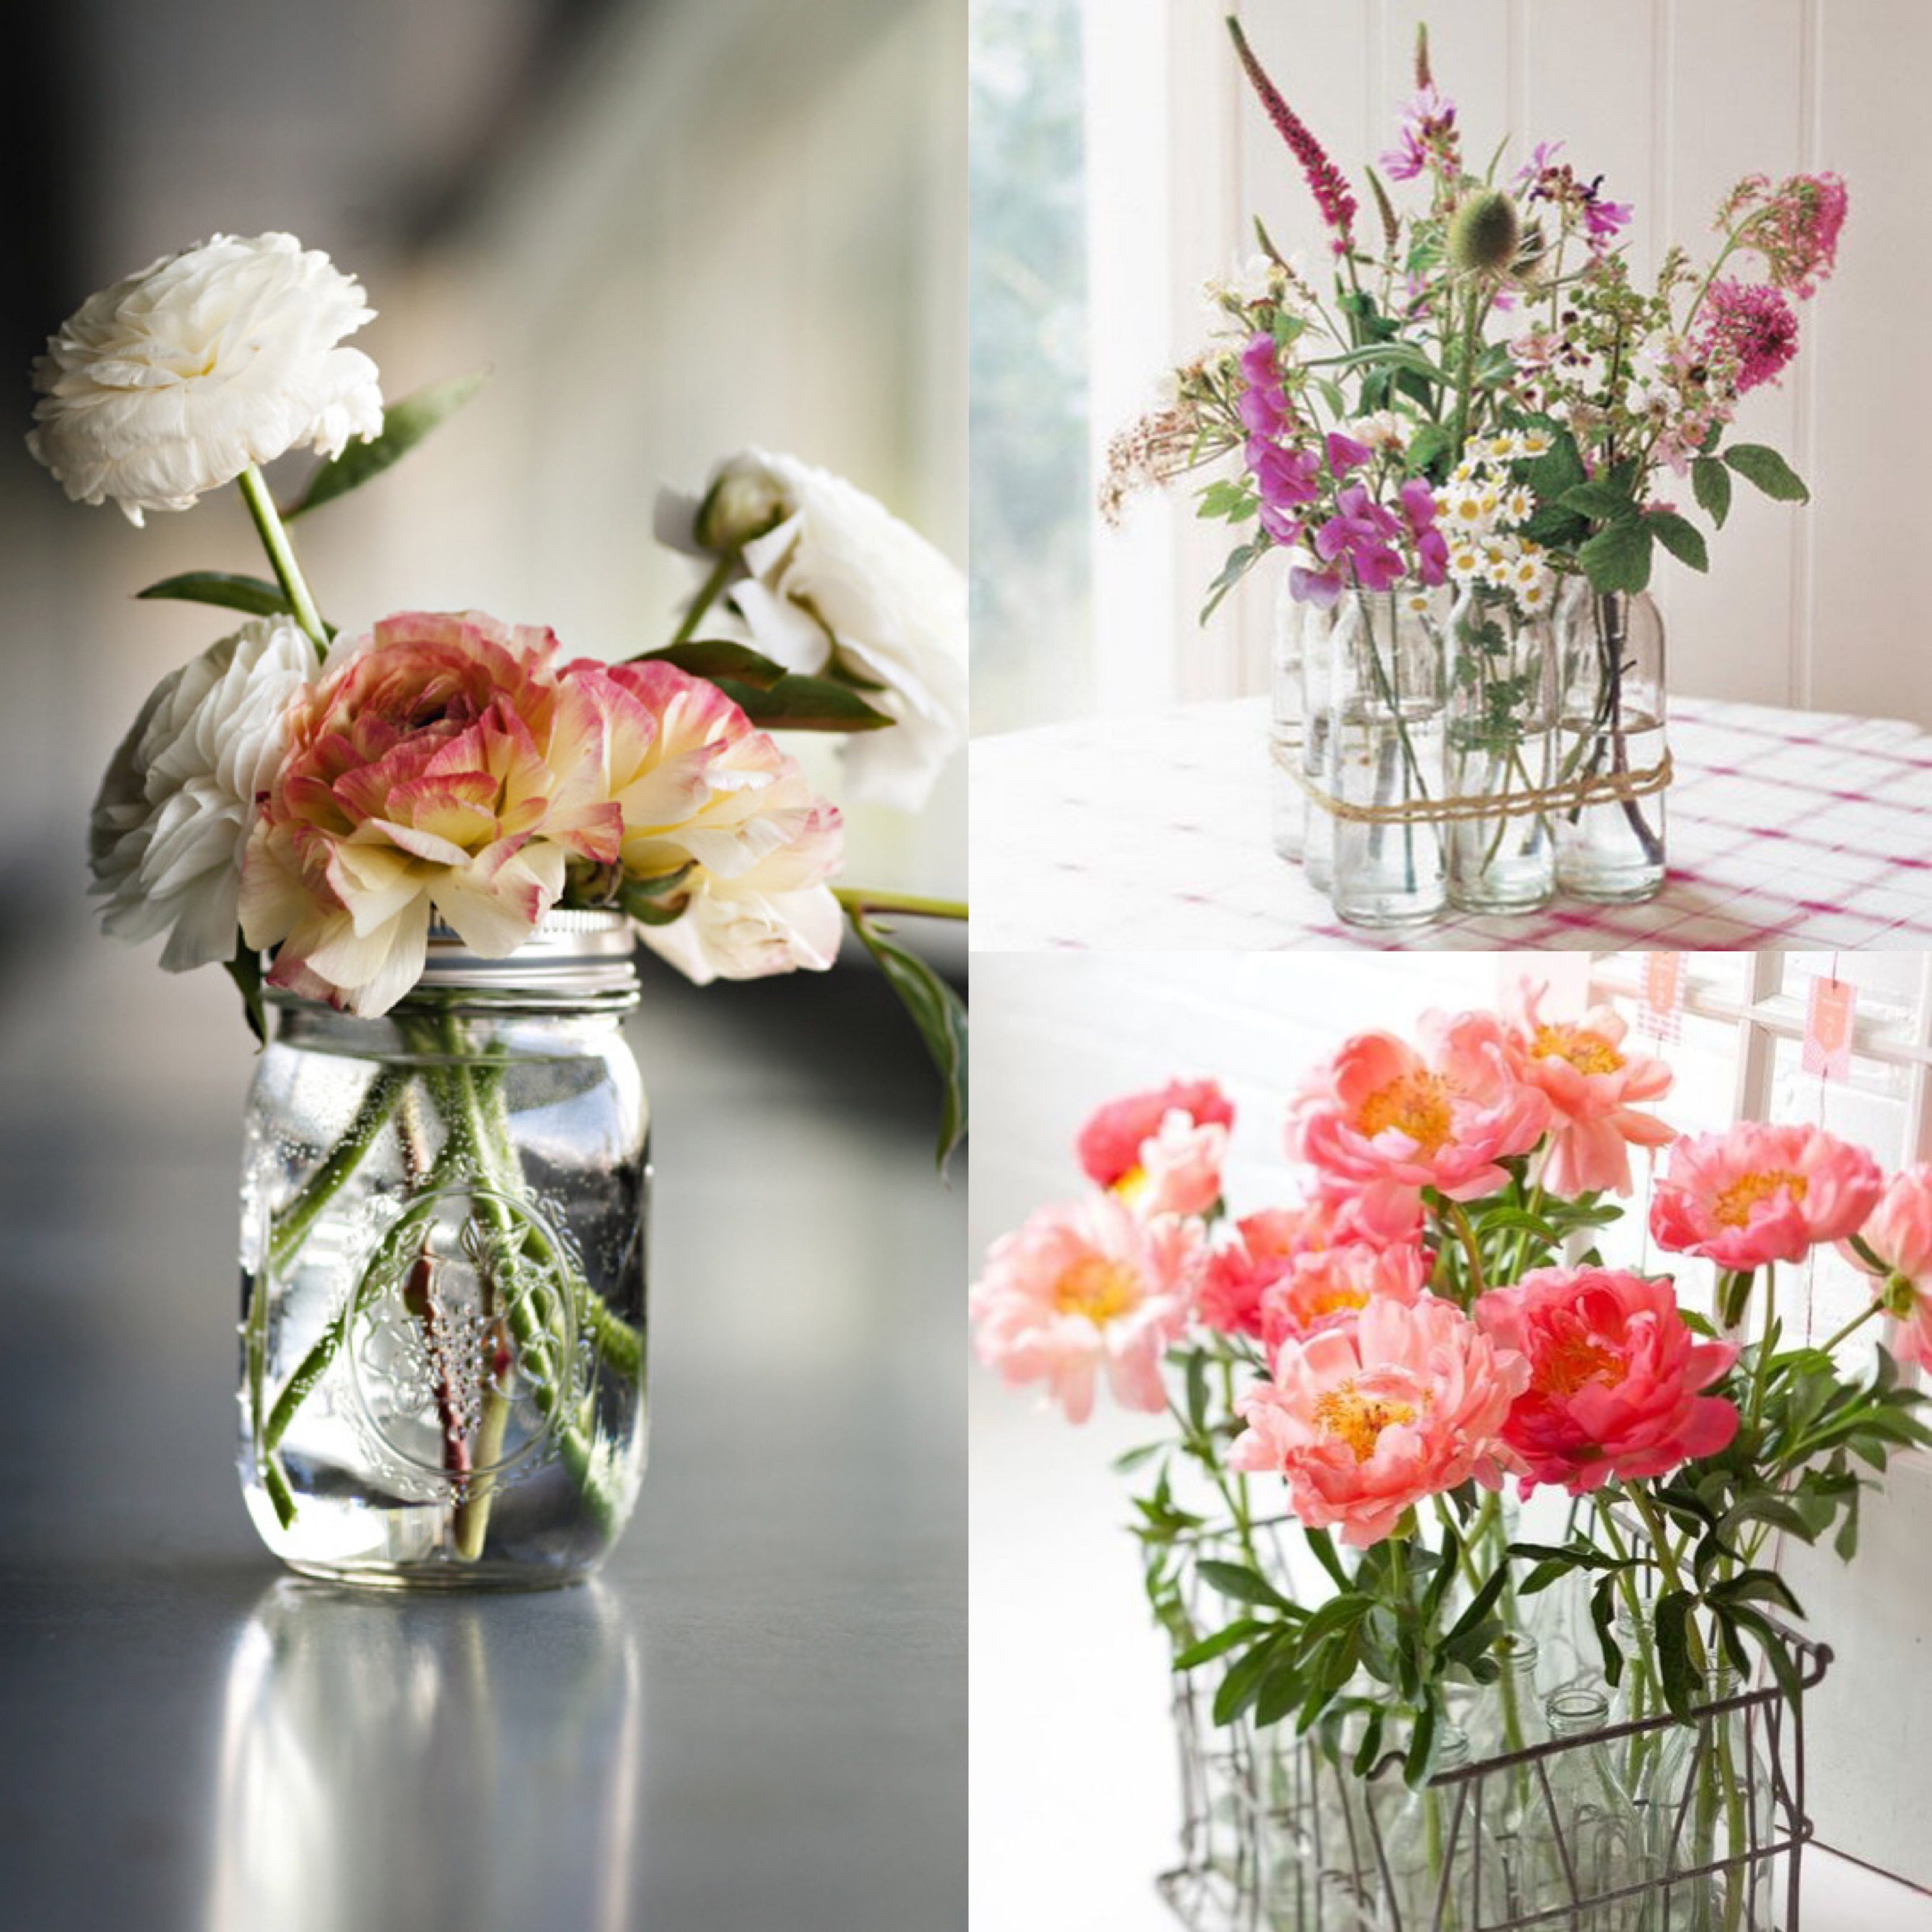 Best ideas about Flower Arrangements DIY
. Save or Pin How to Make Simple DIY Flower Arrangements Now.